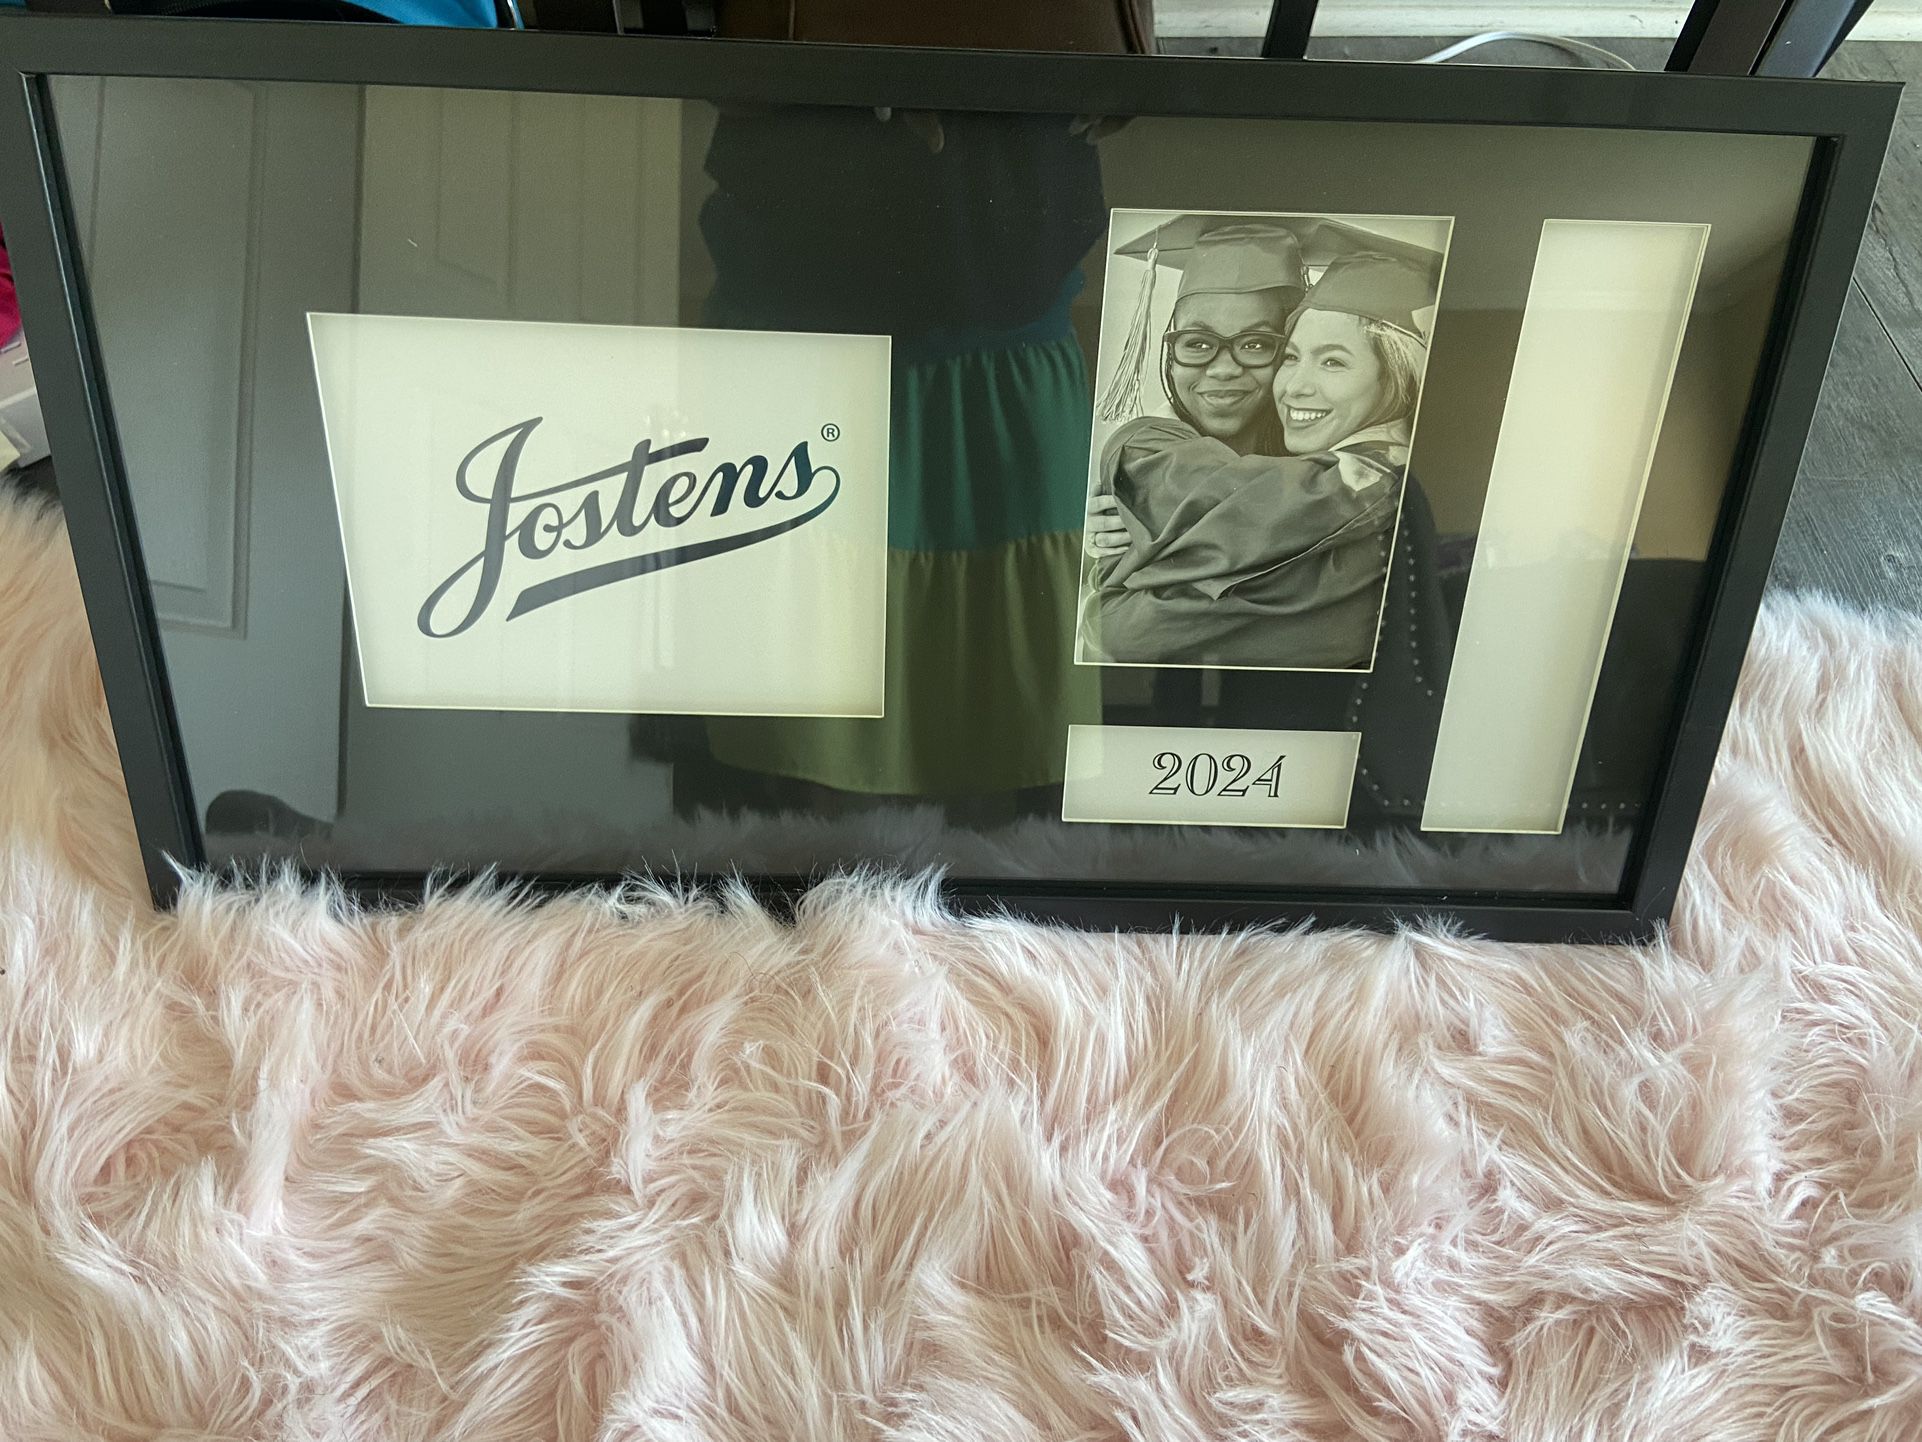 Jostens’s senior picture frame brand new